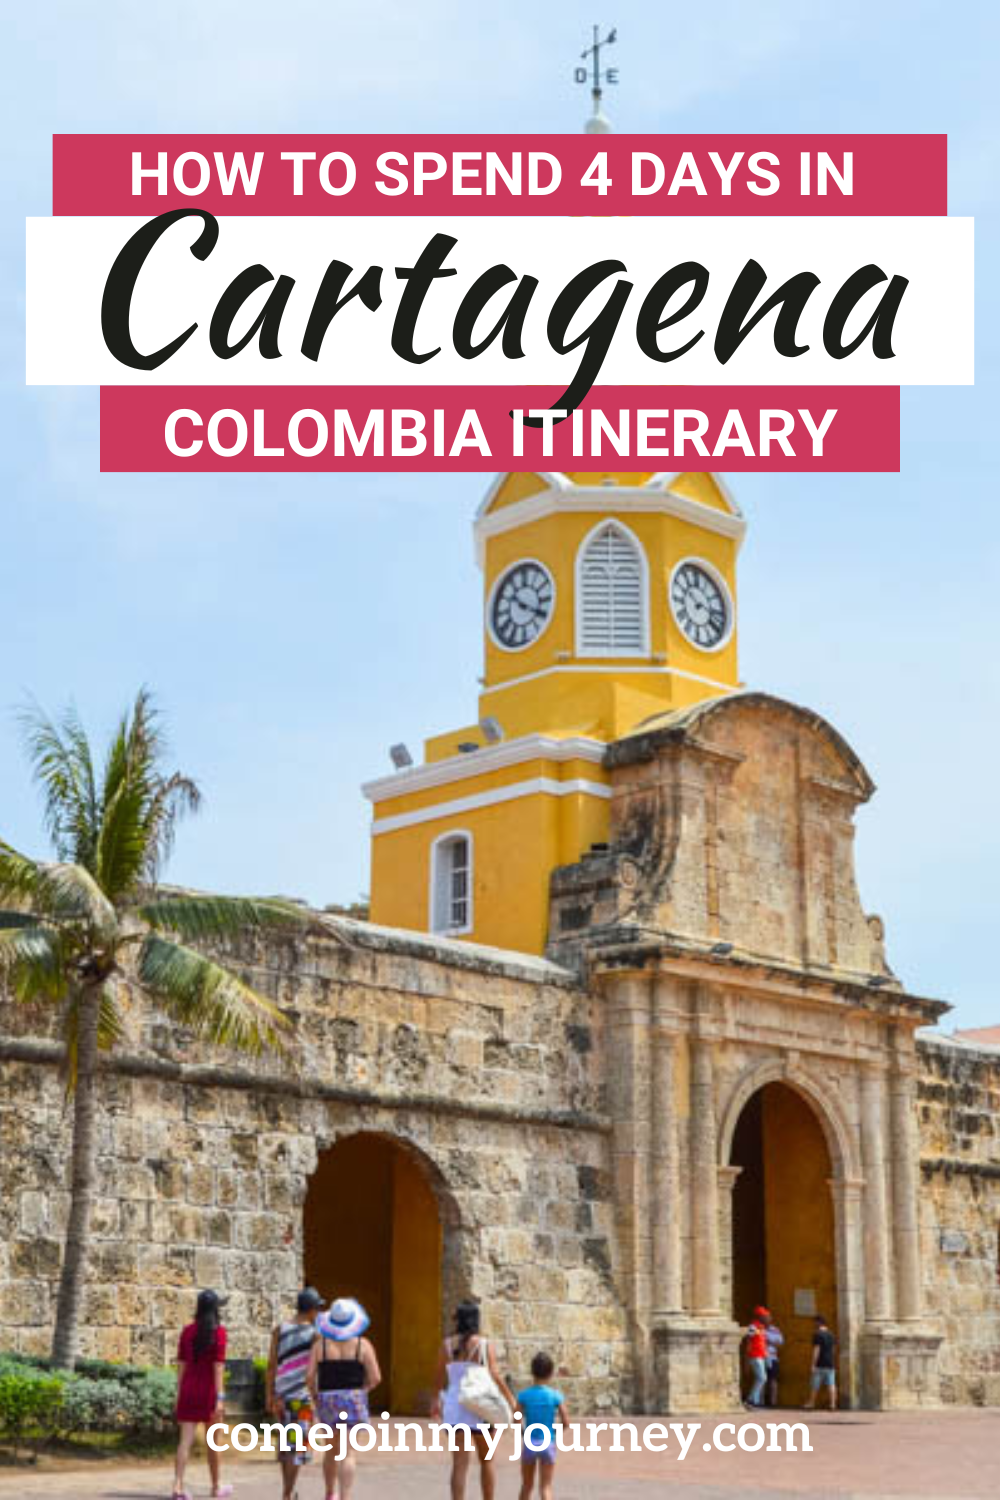 Cartagena Itinerary - 4 Days in Cartagena